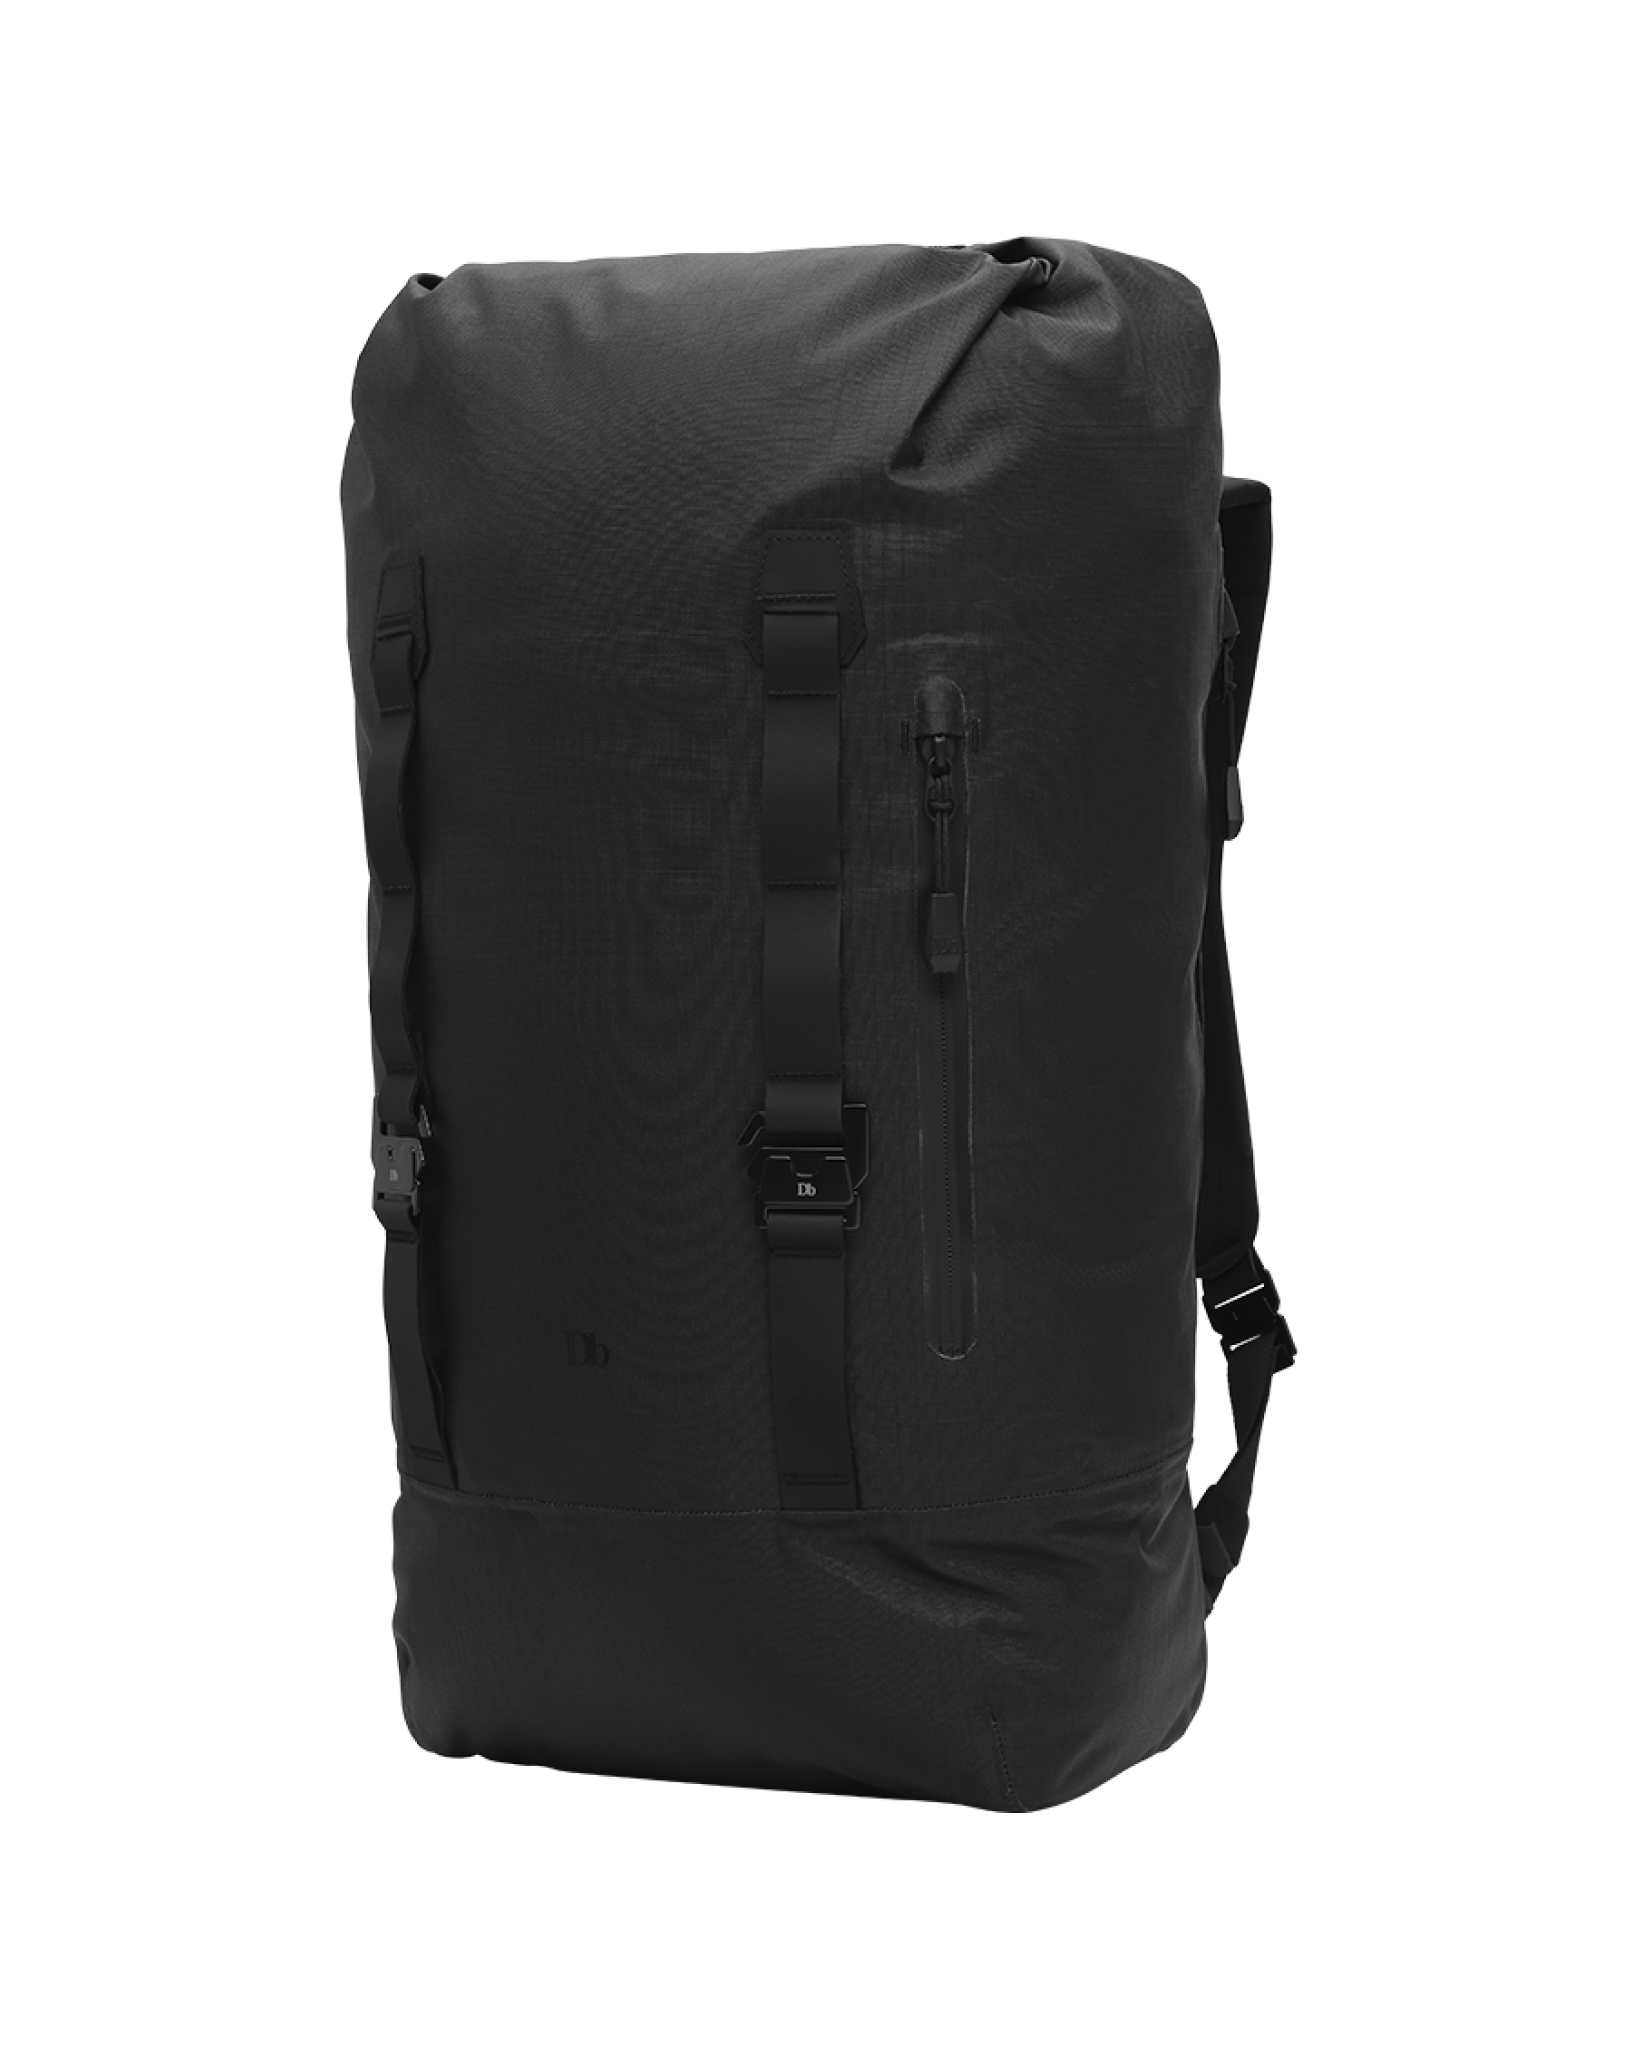 Db - The Sømløs 32L Rolltop Backpack - Backpack for bad weather